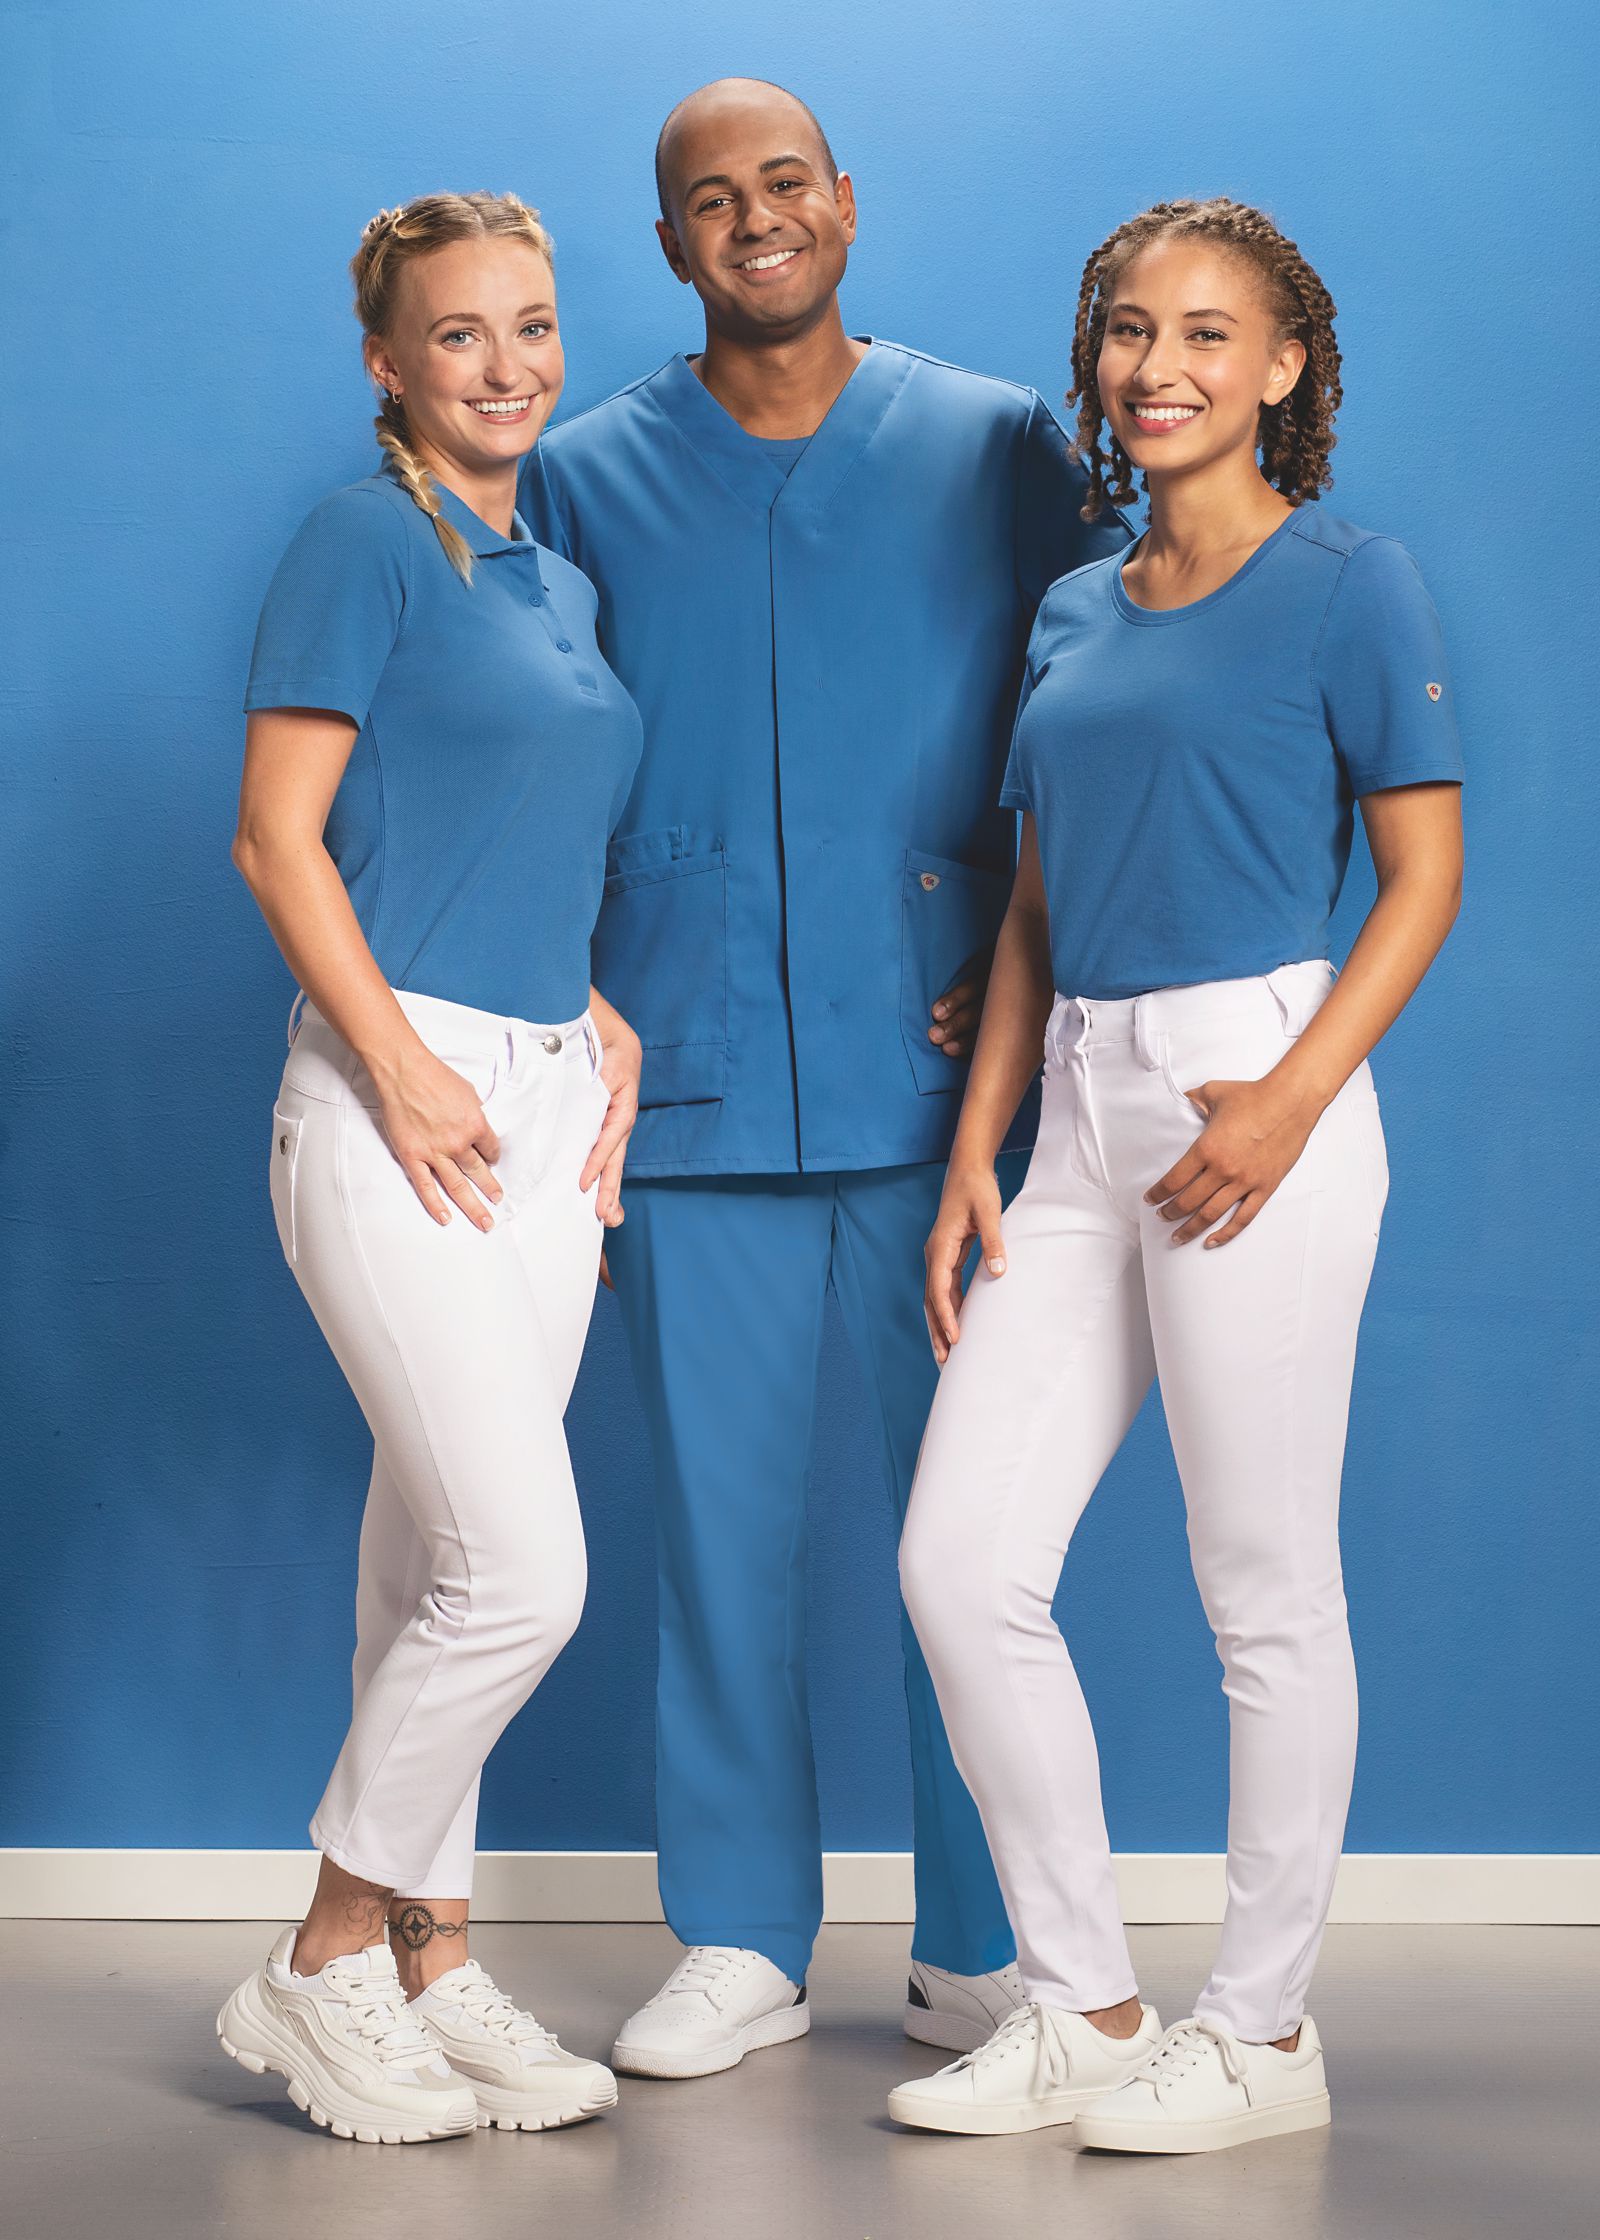 Drei Pfleger*innen posieren in hellblauen Pflege-Outfits.